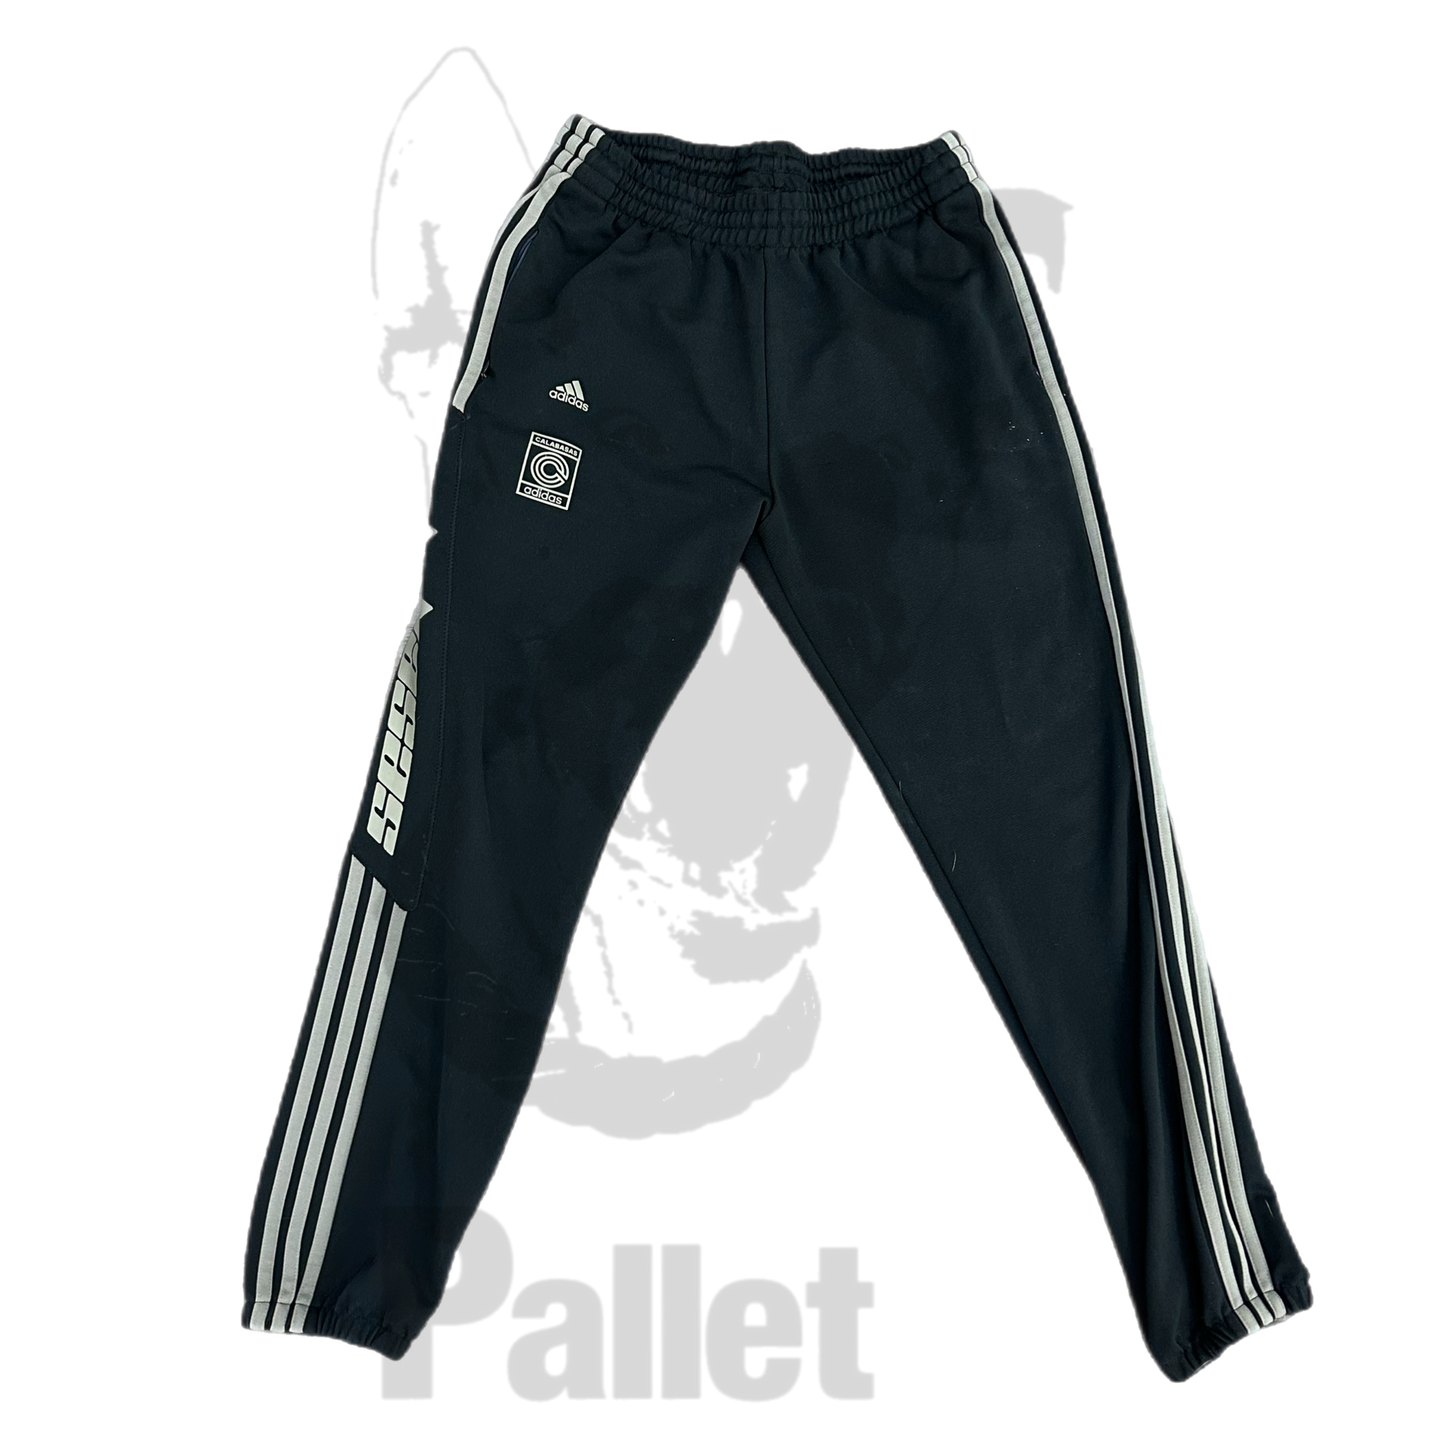 Adidas - "Calabasas Black Sweatpants" - Size Medium